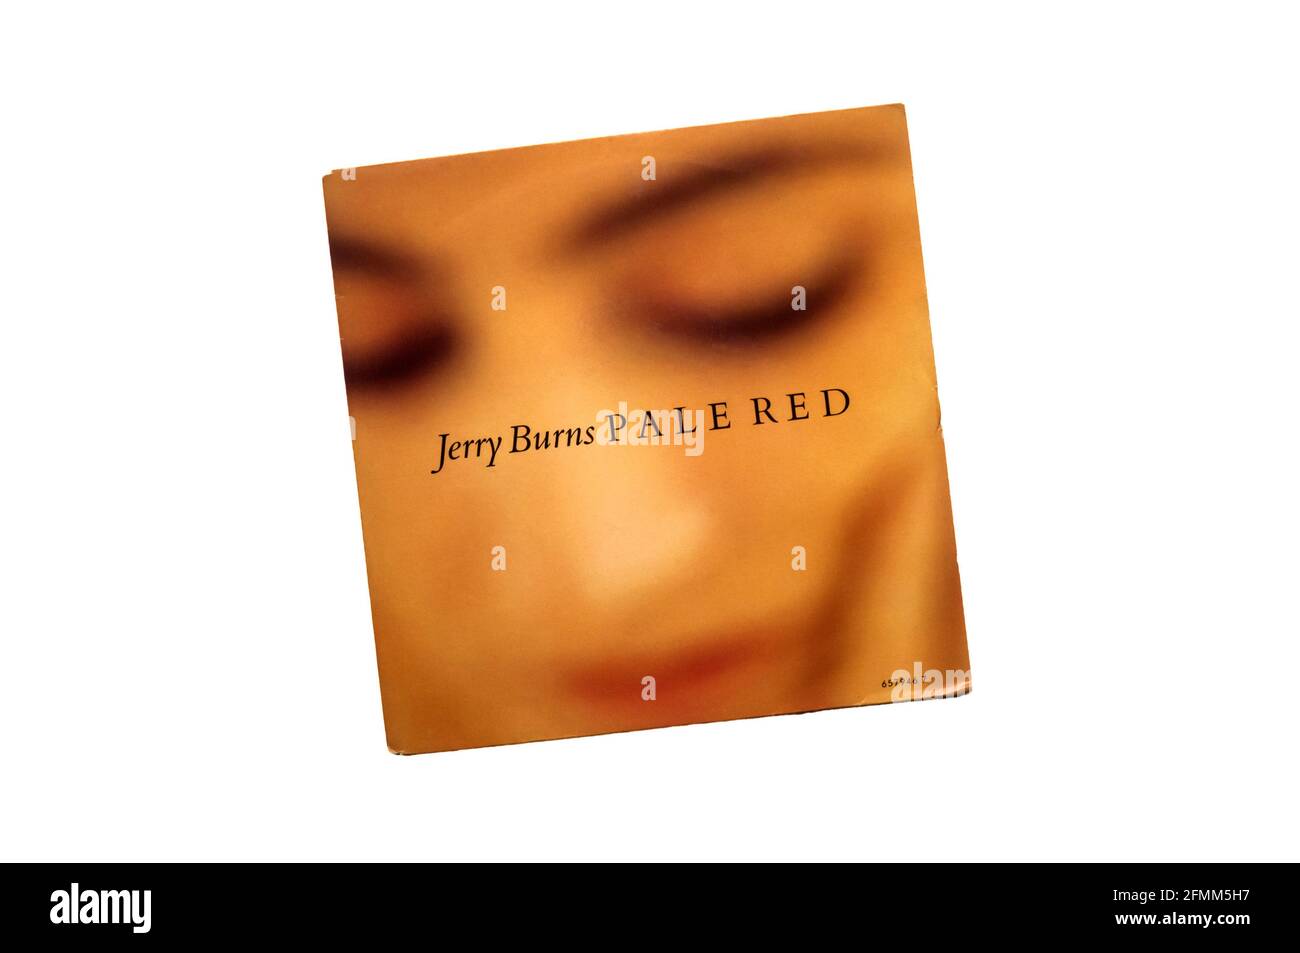 1992 7' singolo, pale Red del cantante scozzese Jerry Burns. Foto Stock